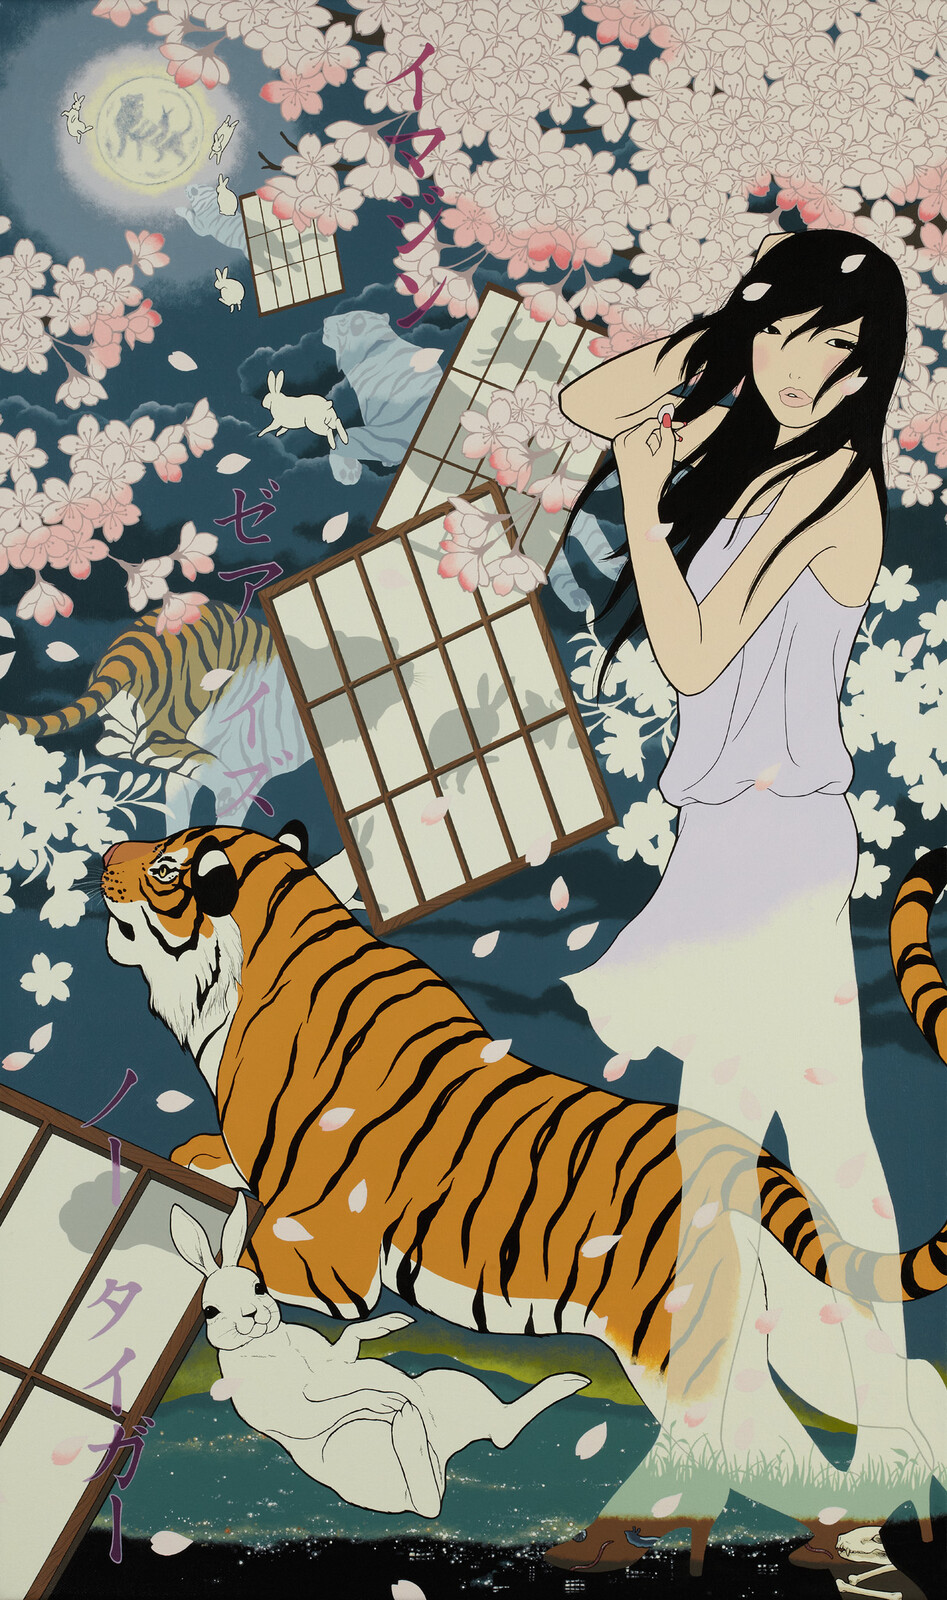 No Taigaa (Imagine there is no tiger) - Yumiko Kayukawa